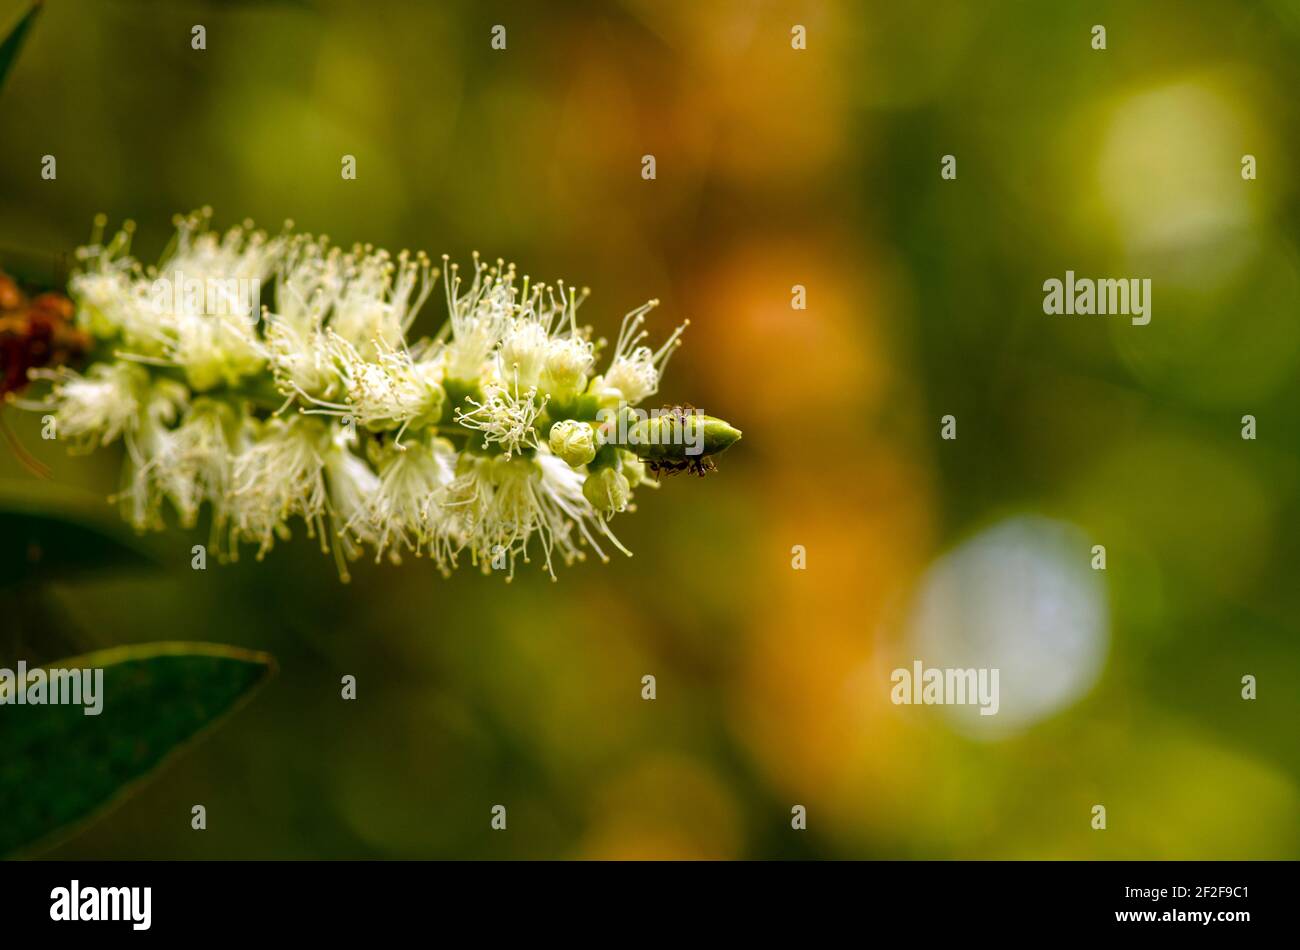 Melaleuca cajuputi flower and ants, in shallow focus Stock Photo